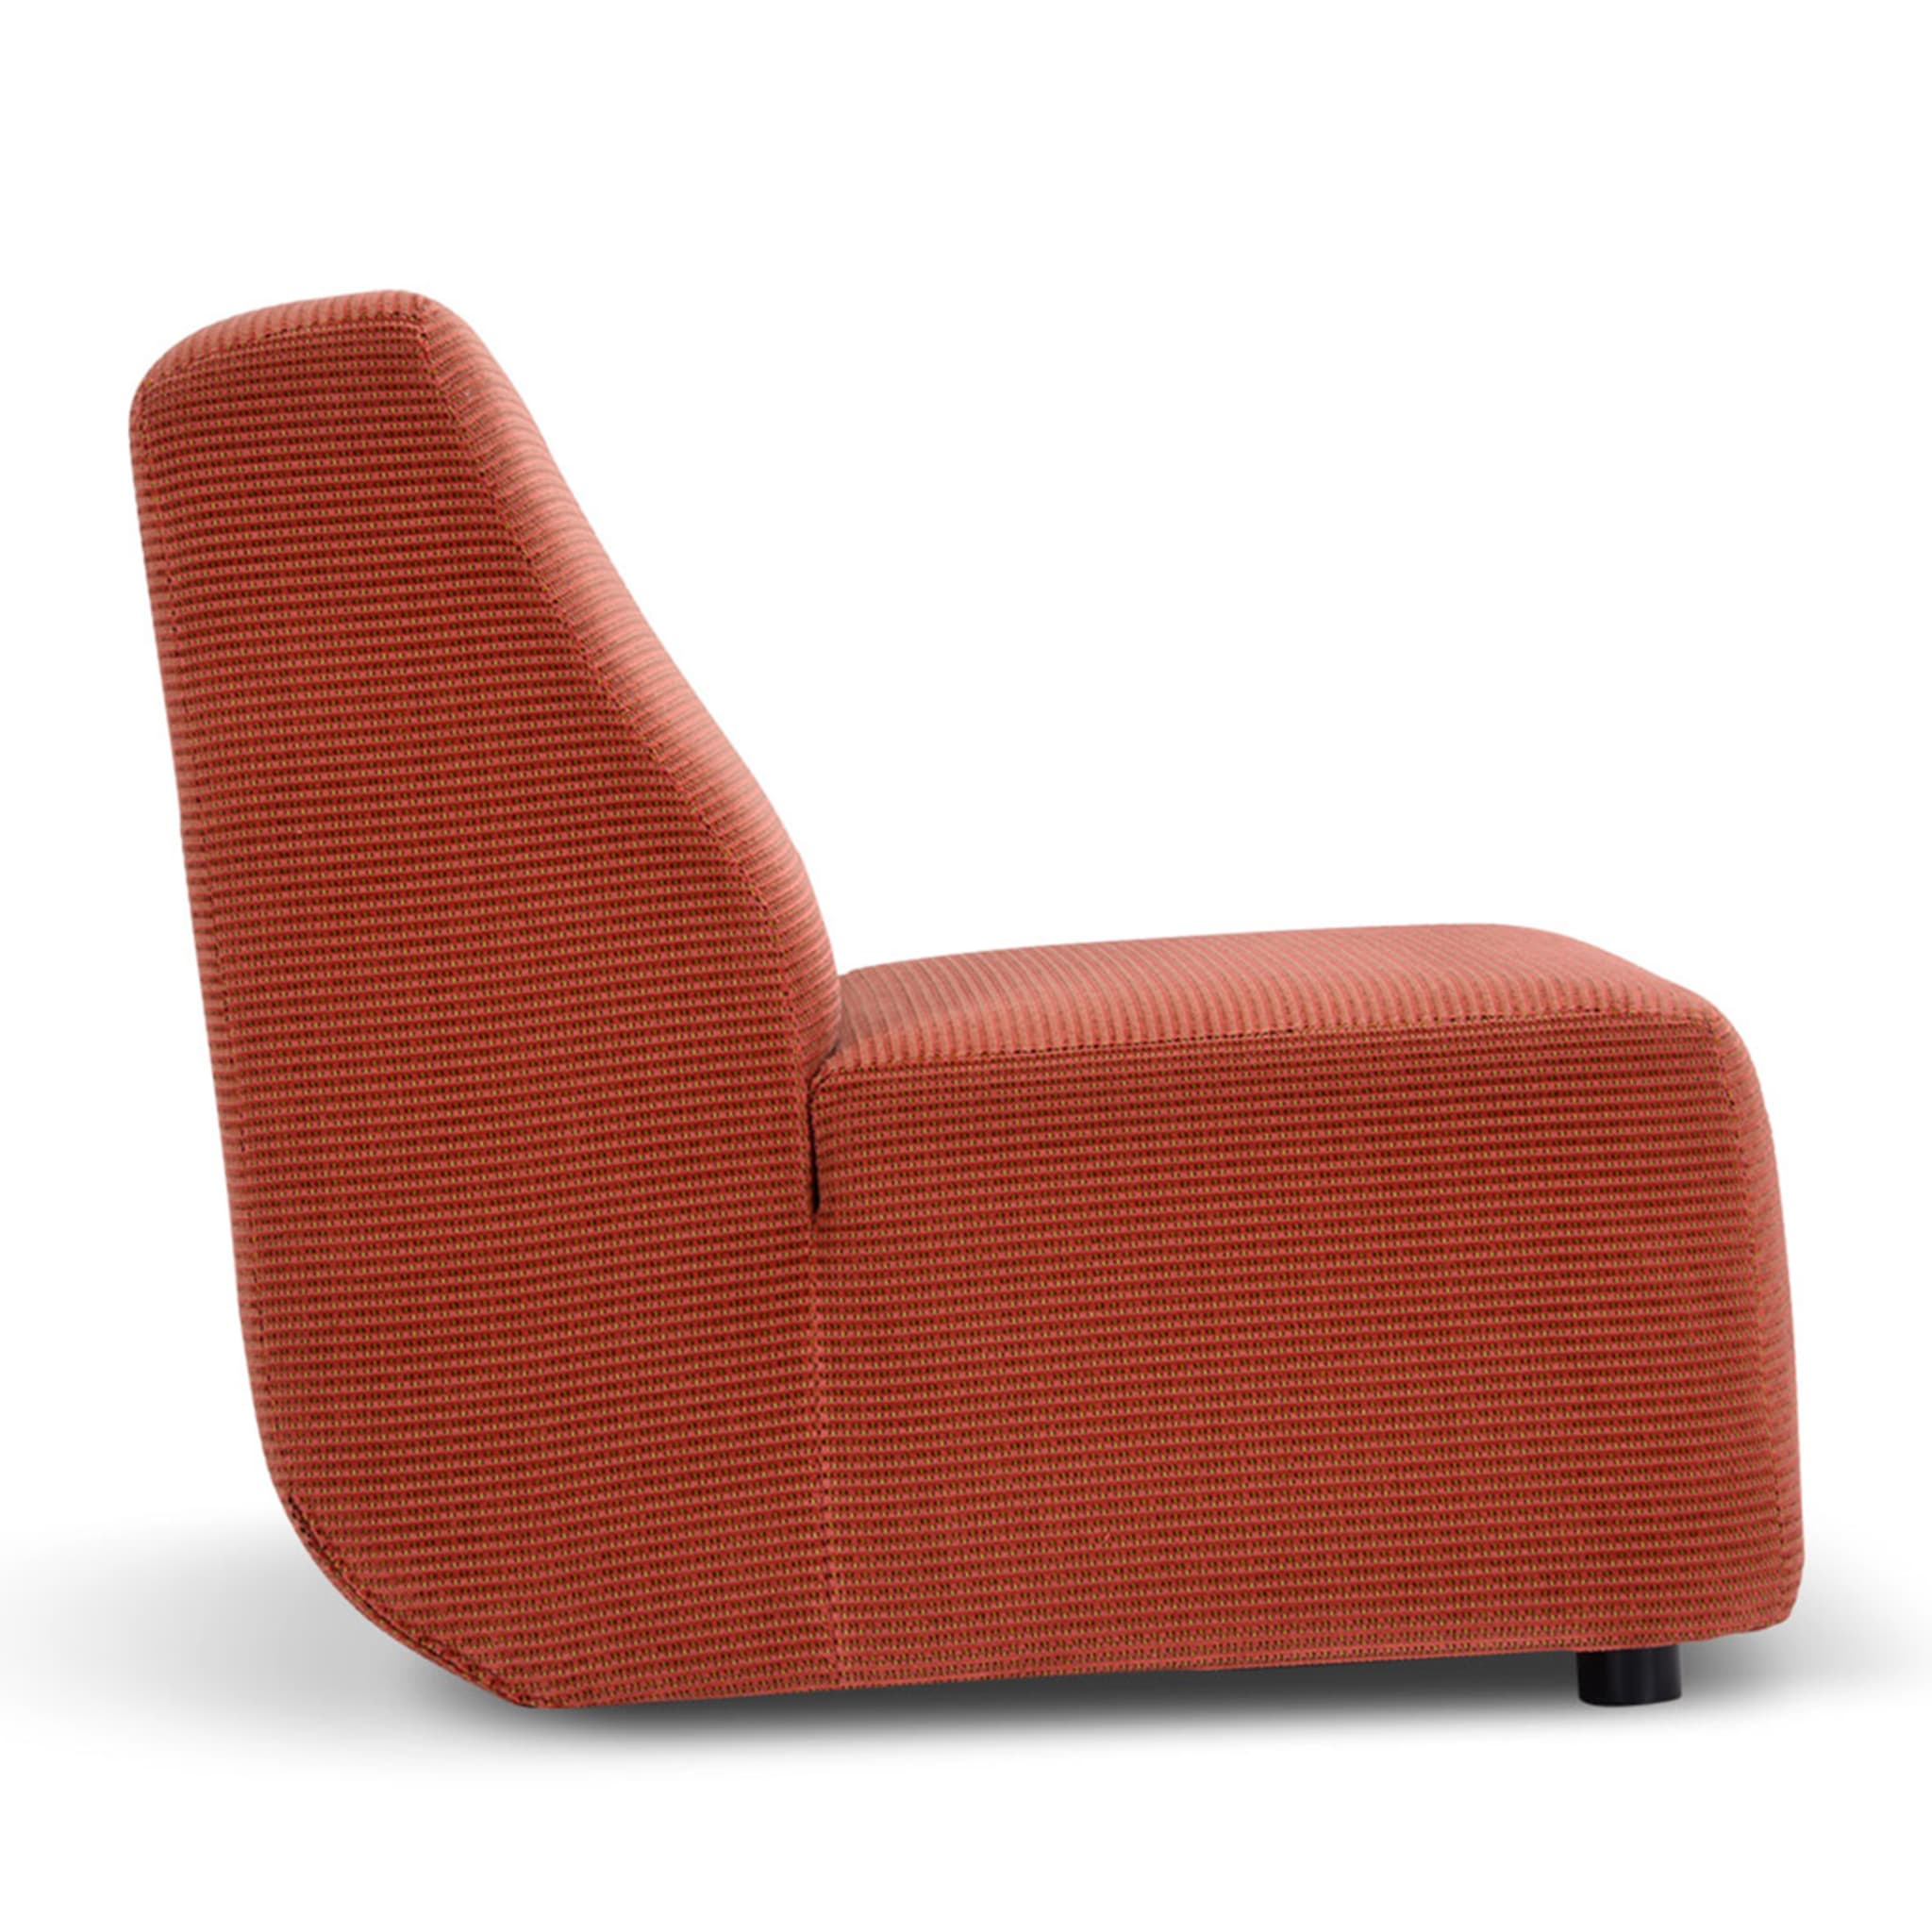 Nuda Orange Lounge Chair by Simone Micheli - Alternative view 2